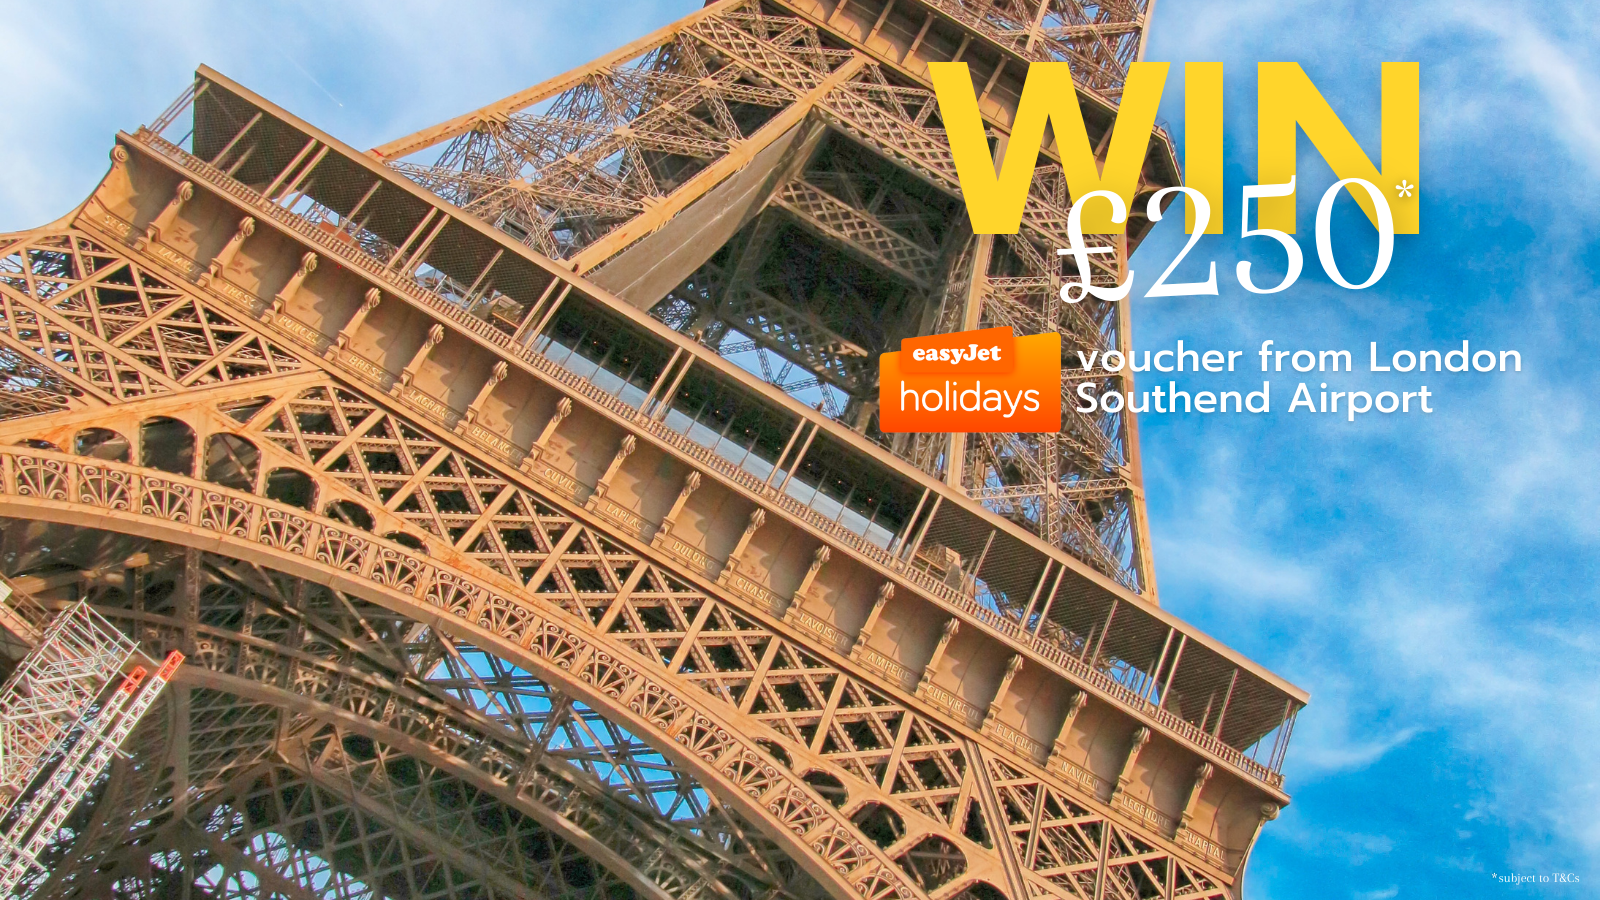 The Eiffel Tower, Paris, with text promoting London Southend's £250 voucher prize